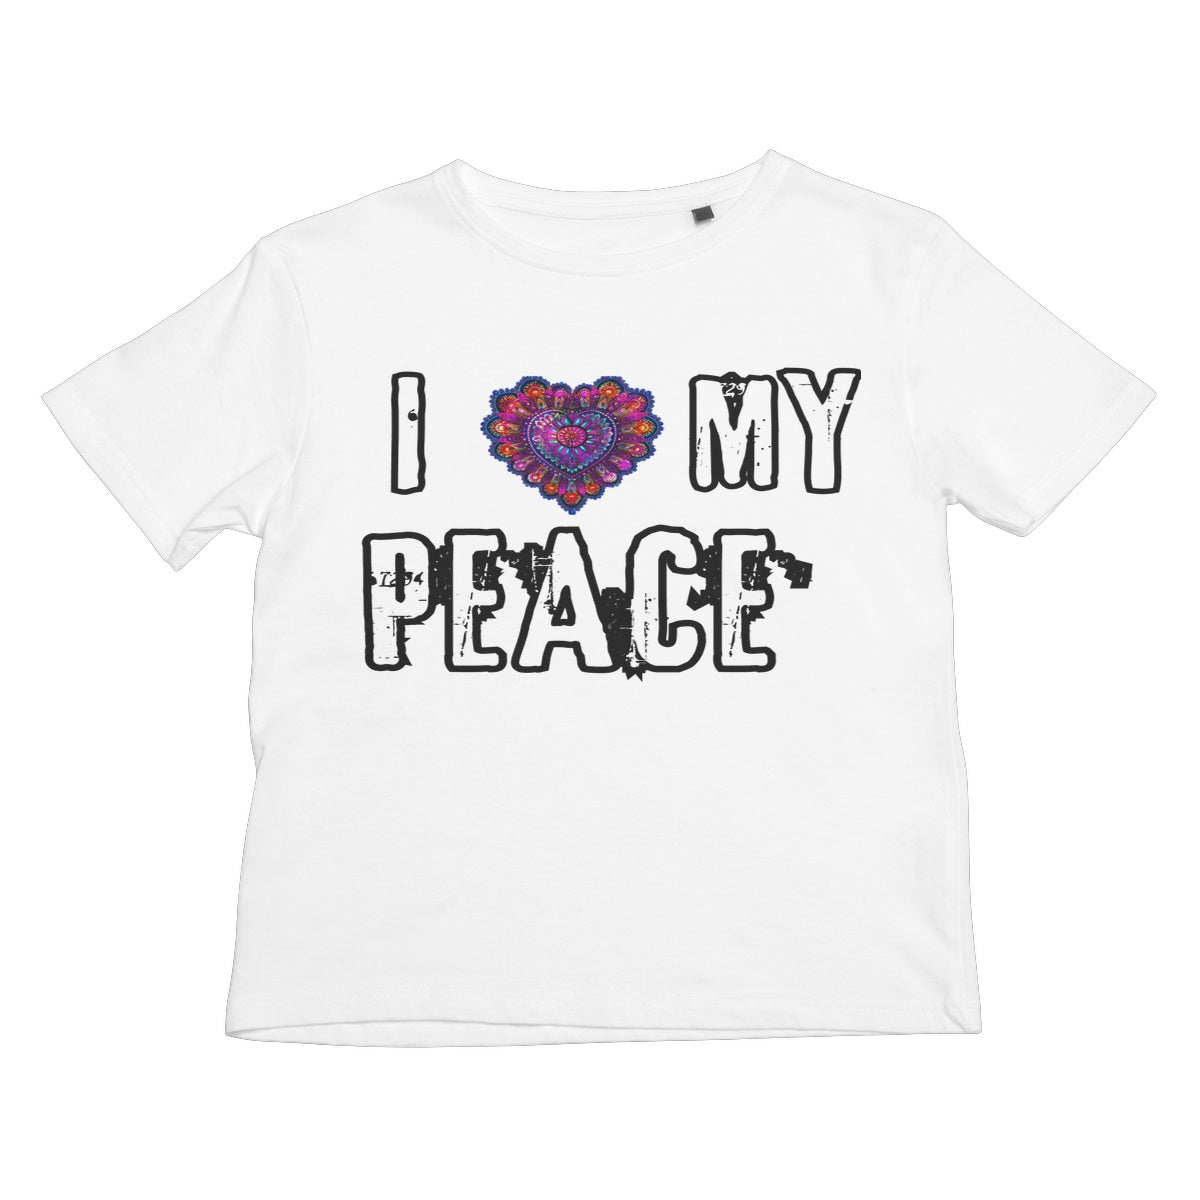 I Love My Peace Kids T-Shirt